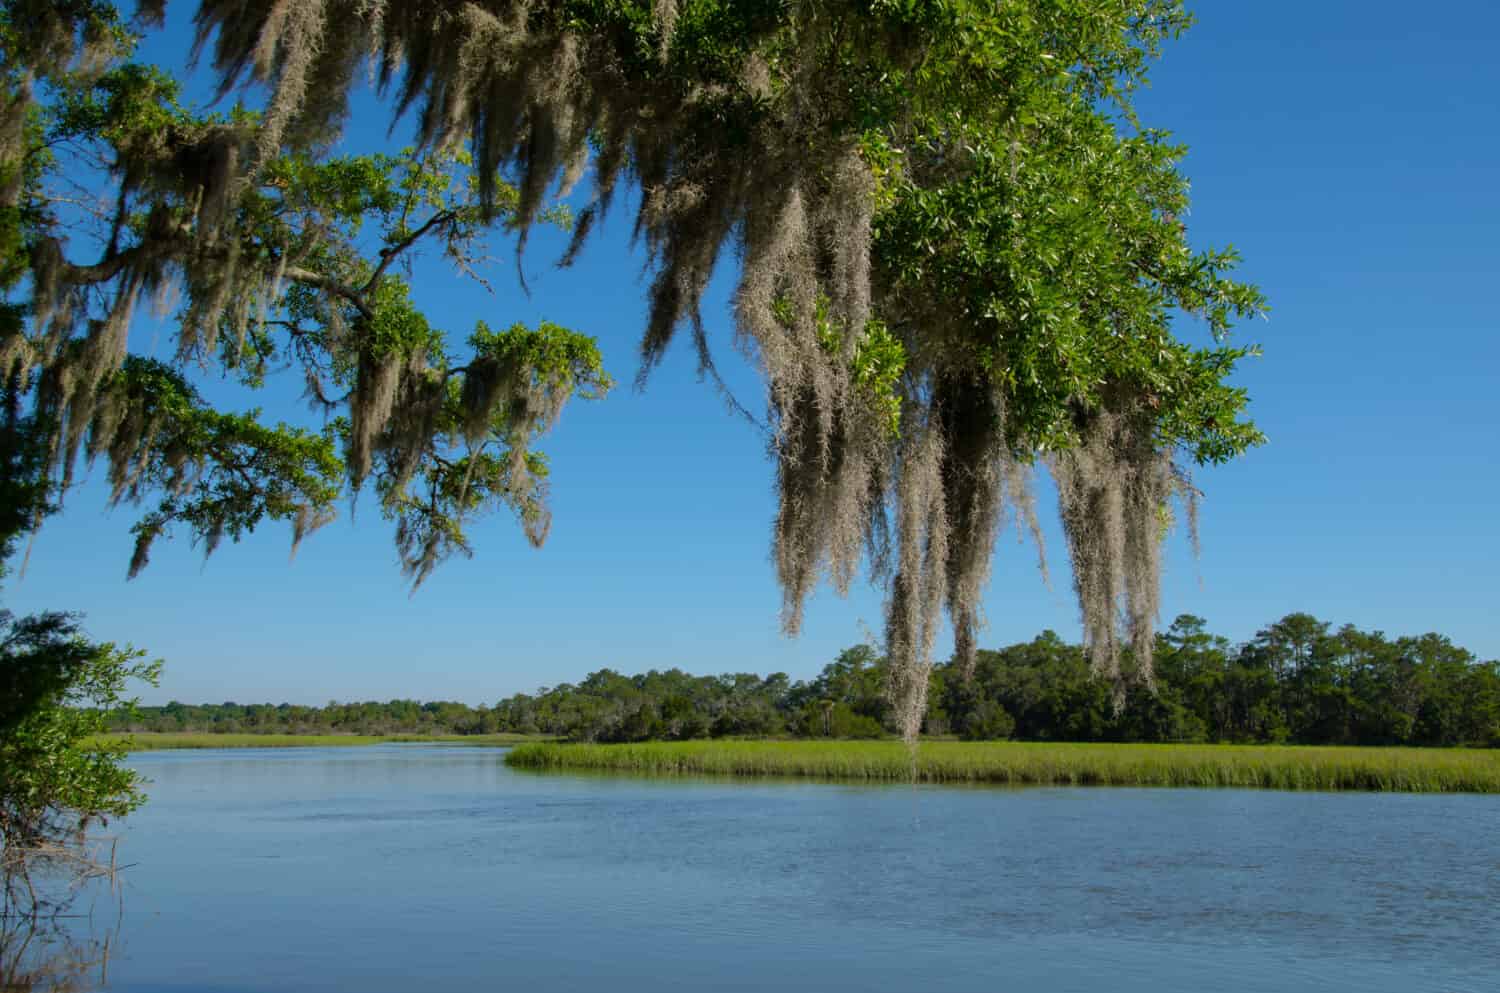 Moss draped Live Oak over the Edisto River at Botany Bay Plantation in South Carolina